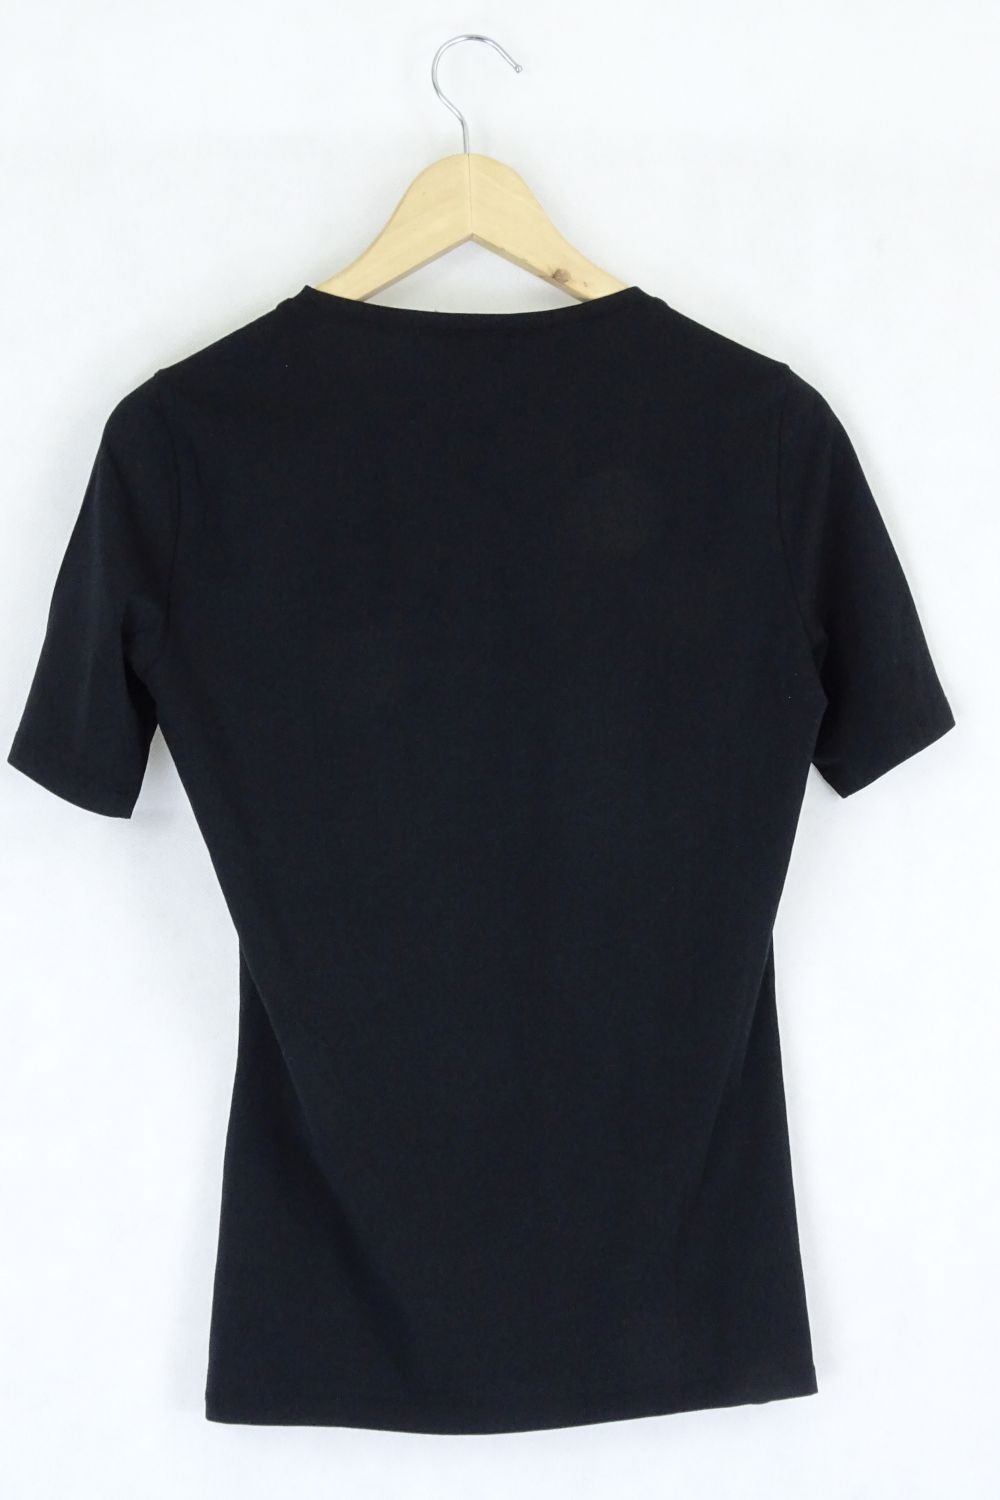 AJ - Armani Jeans Black T-Shirt S